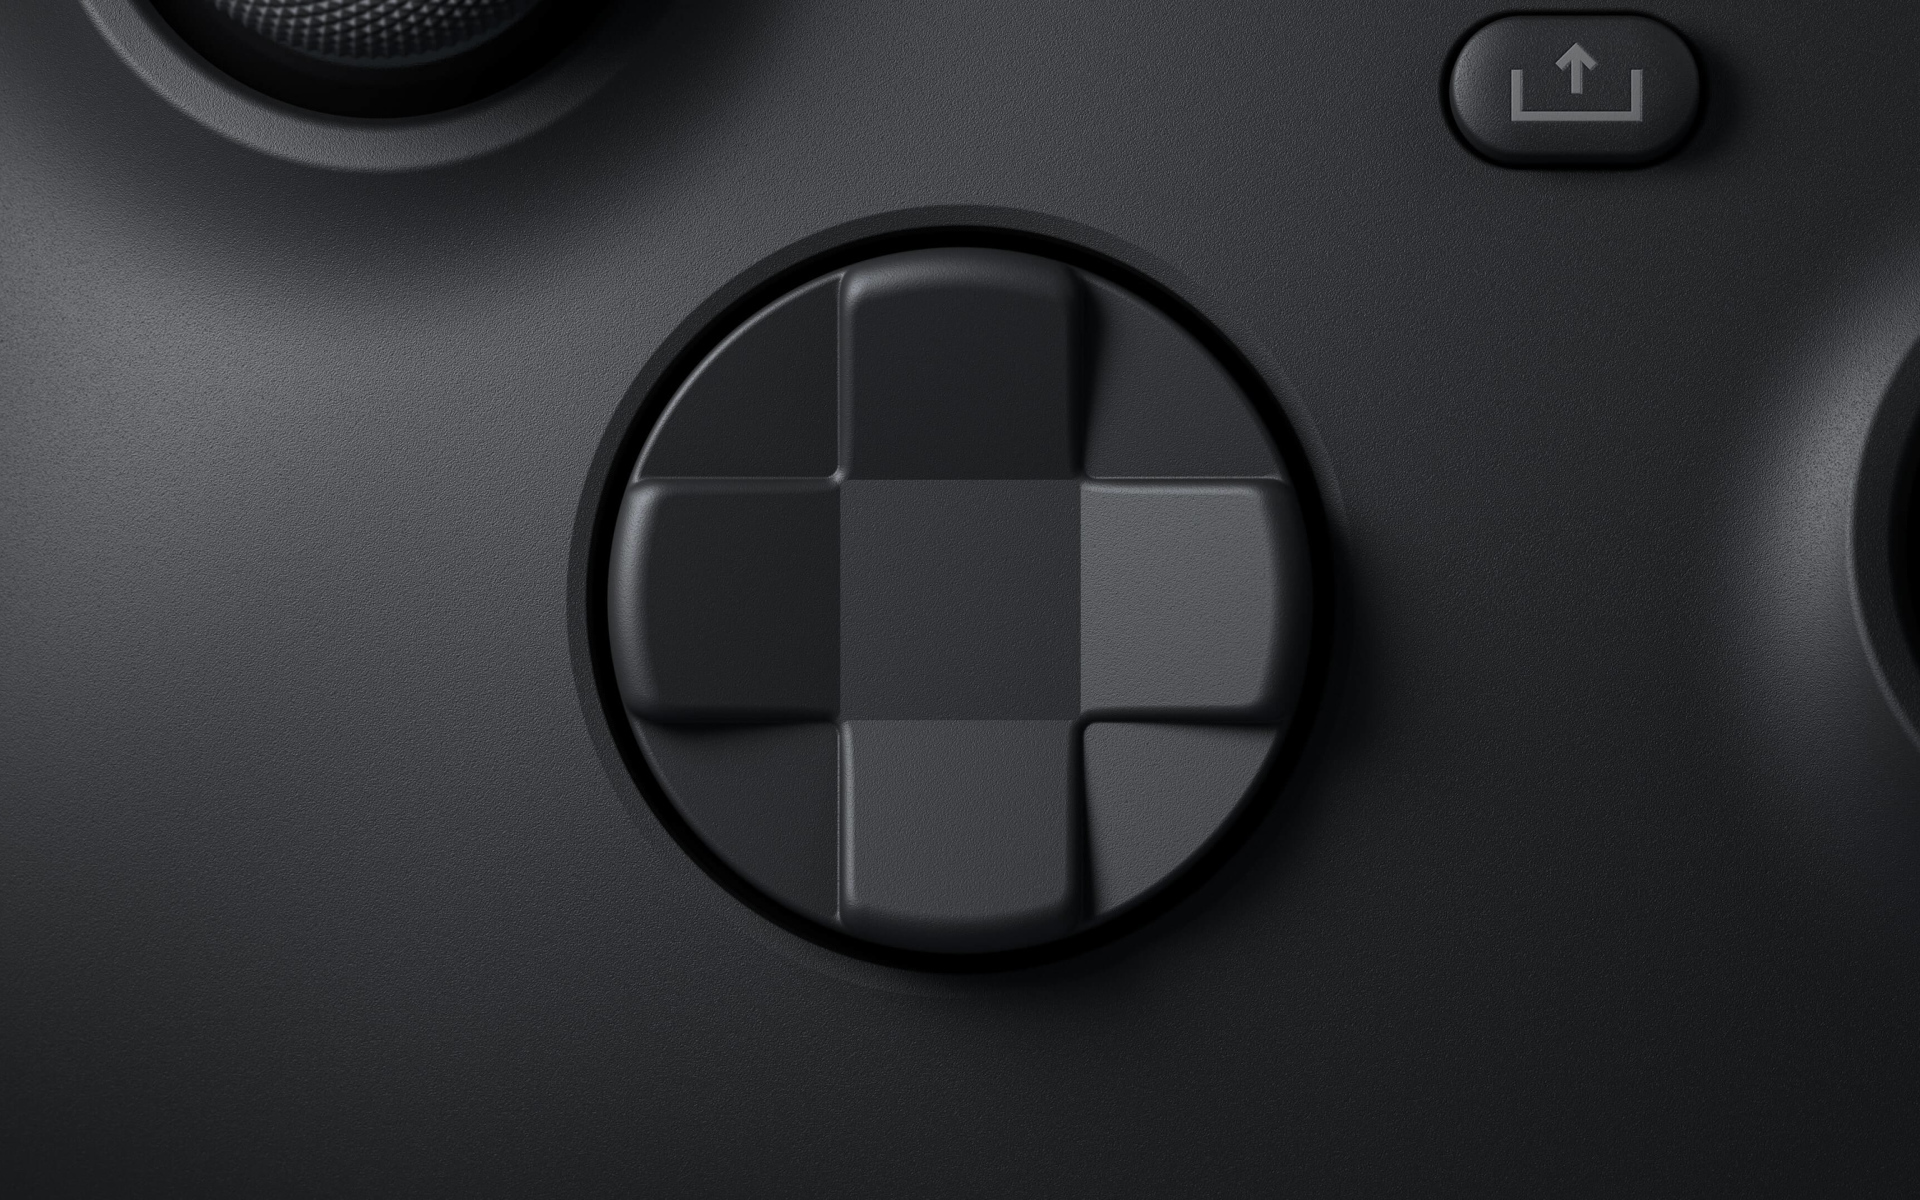 Black Xbox Series X controller close up